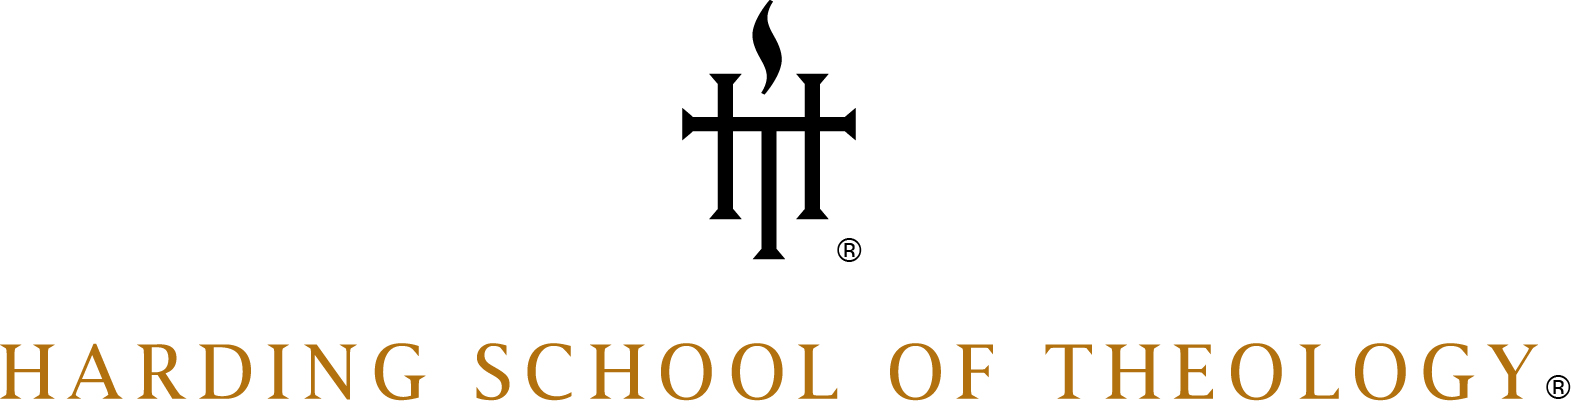 Harding School of Theology